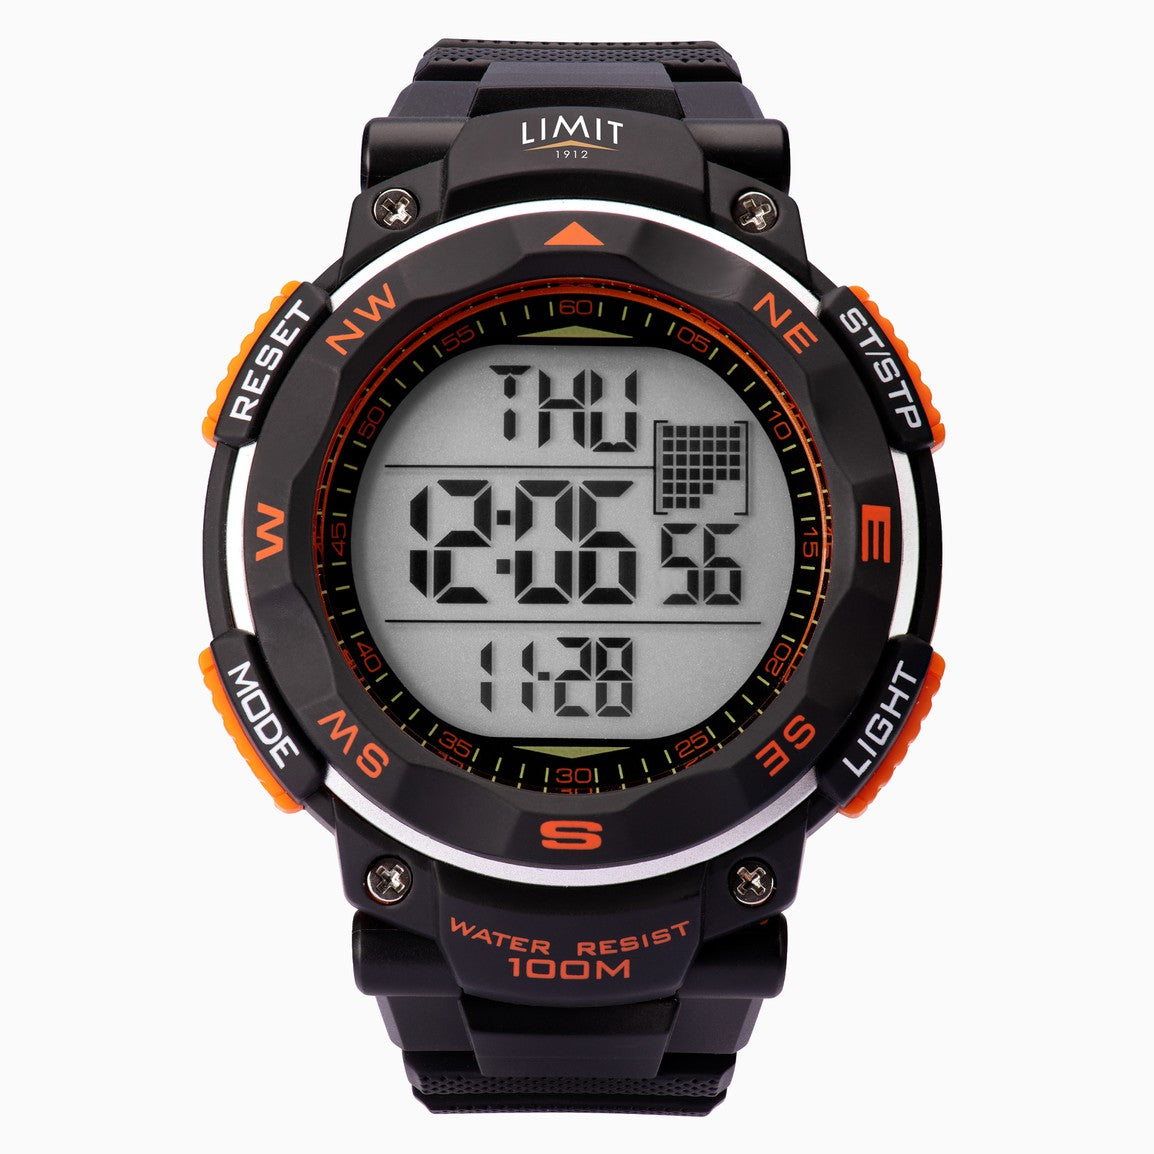 Limit Digital Watch (Black and Orange)